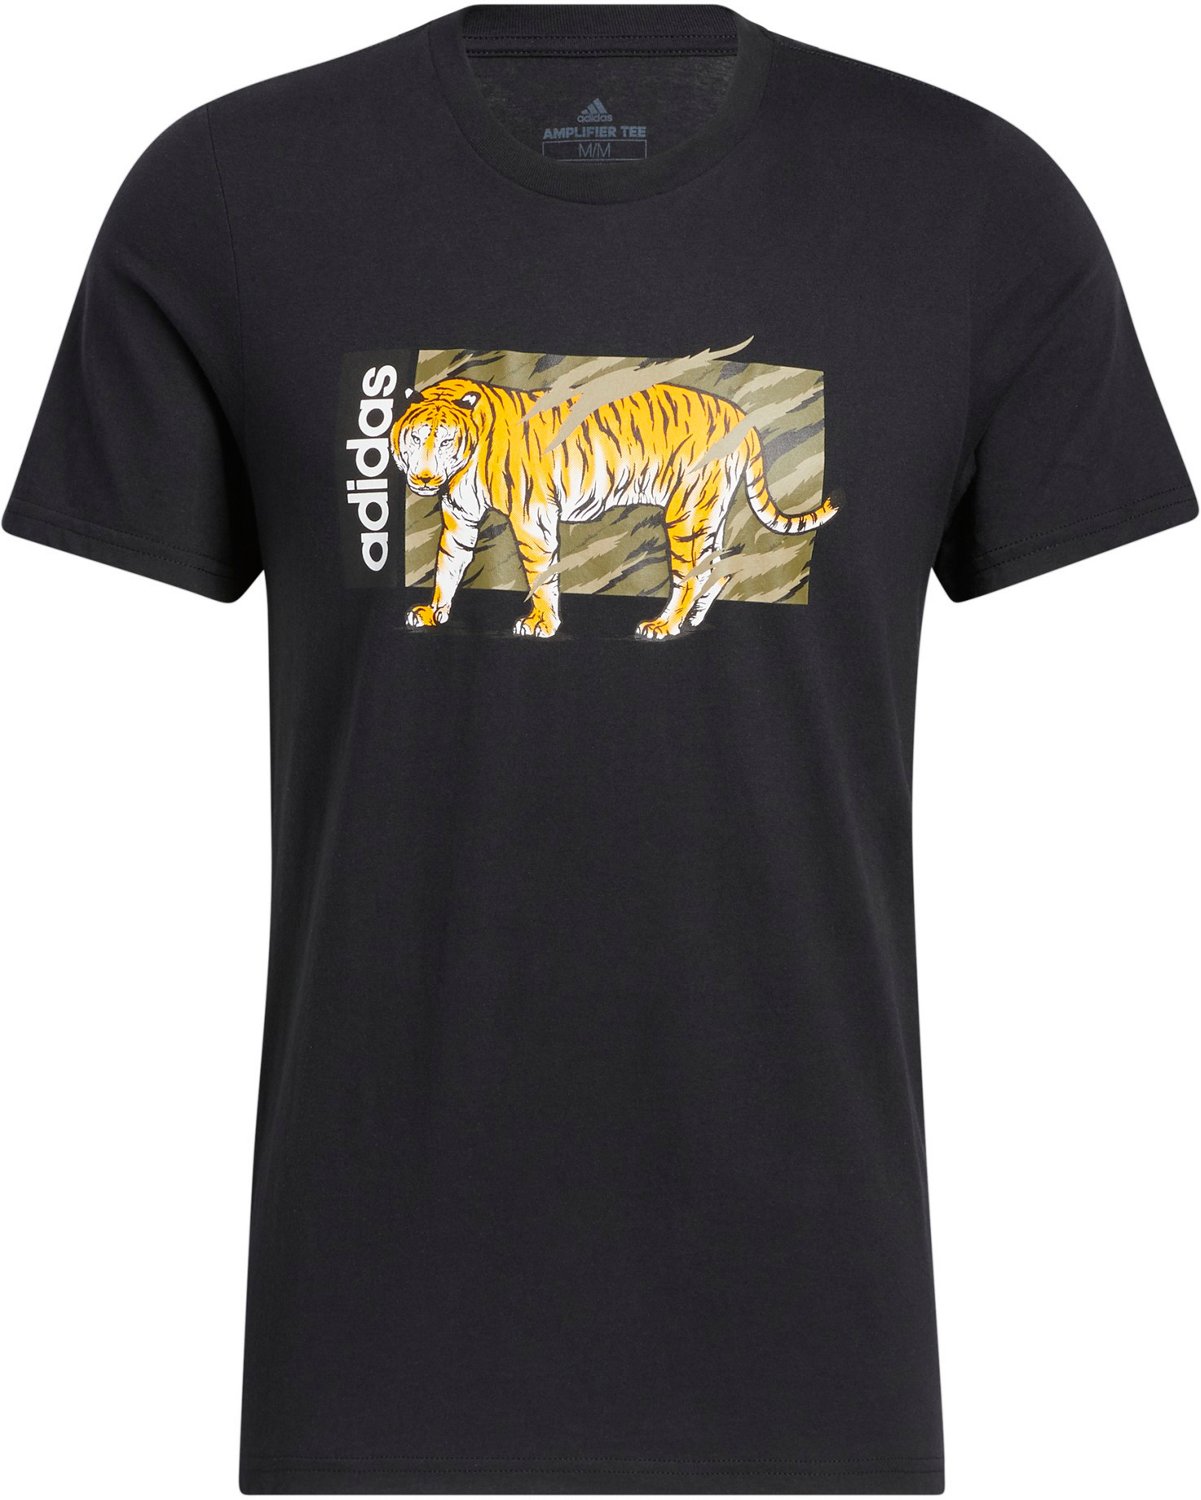 adidas Men's Tiger Graphic Sleeve T-shirt